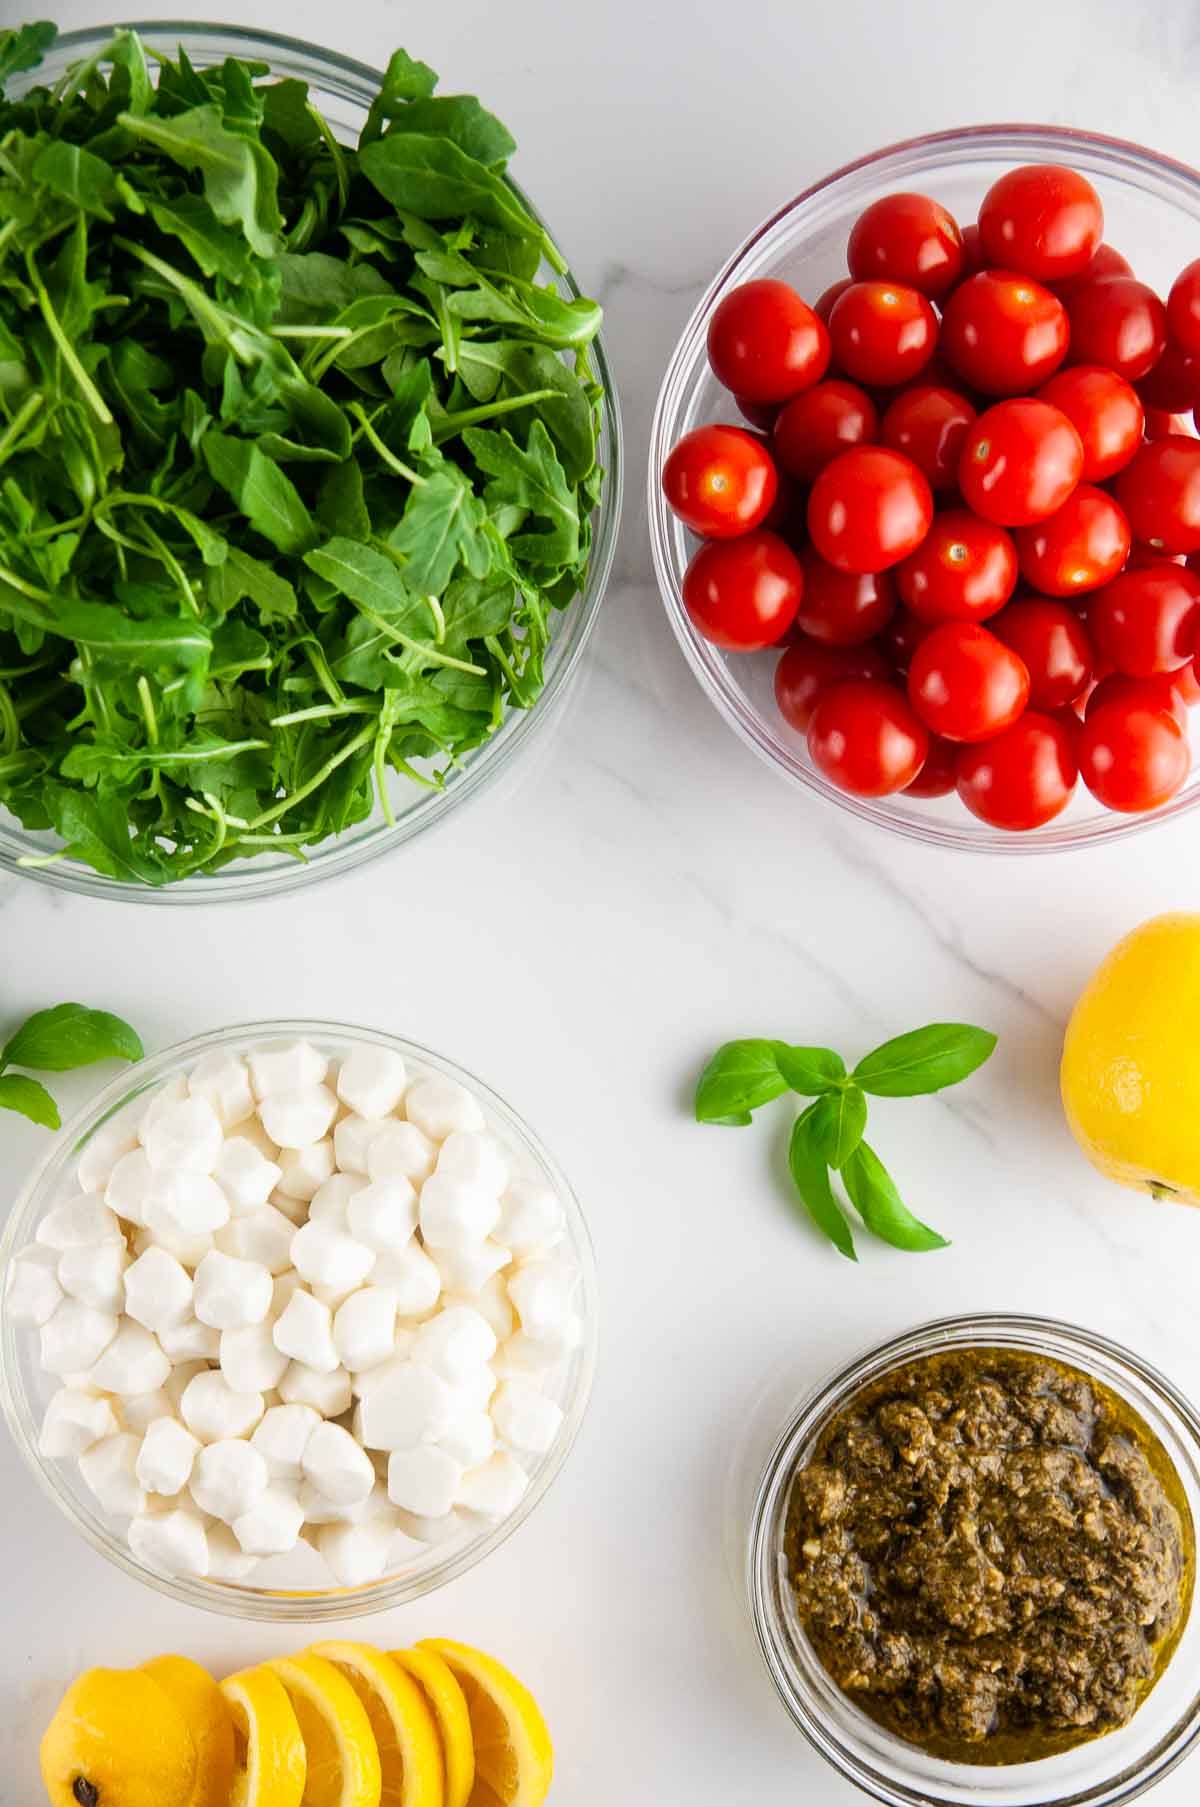 Ingredients for Pesto Caprese Salad: Arugula, Tomatoes, Mozzarella, Basil, Pesto, Lemon